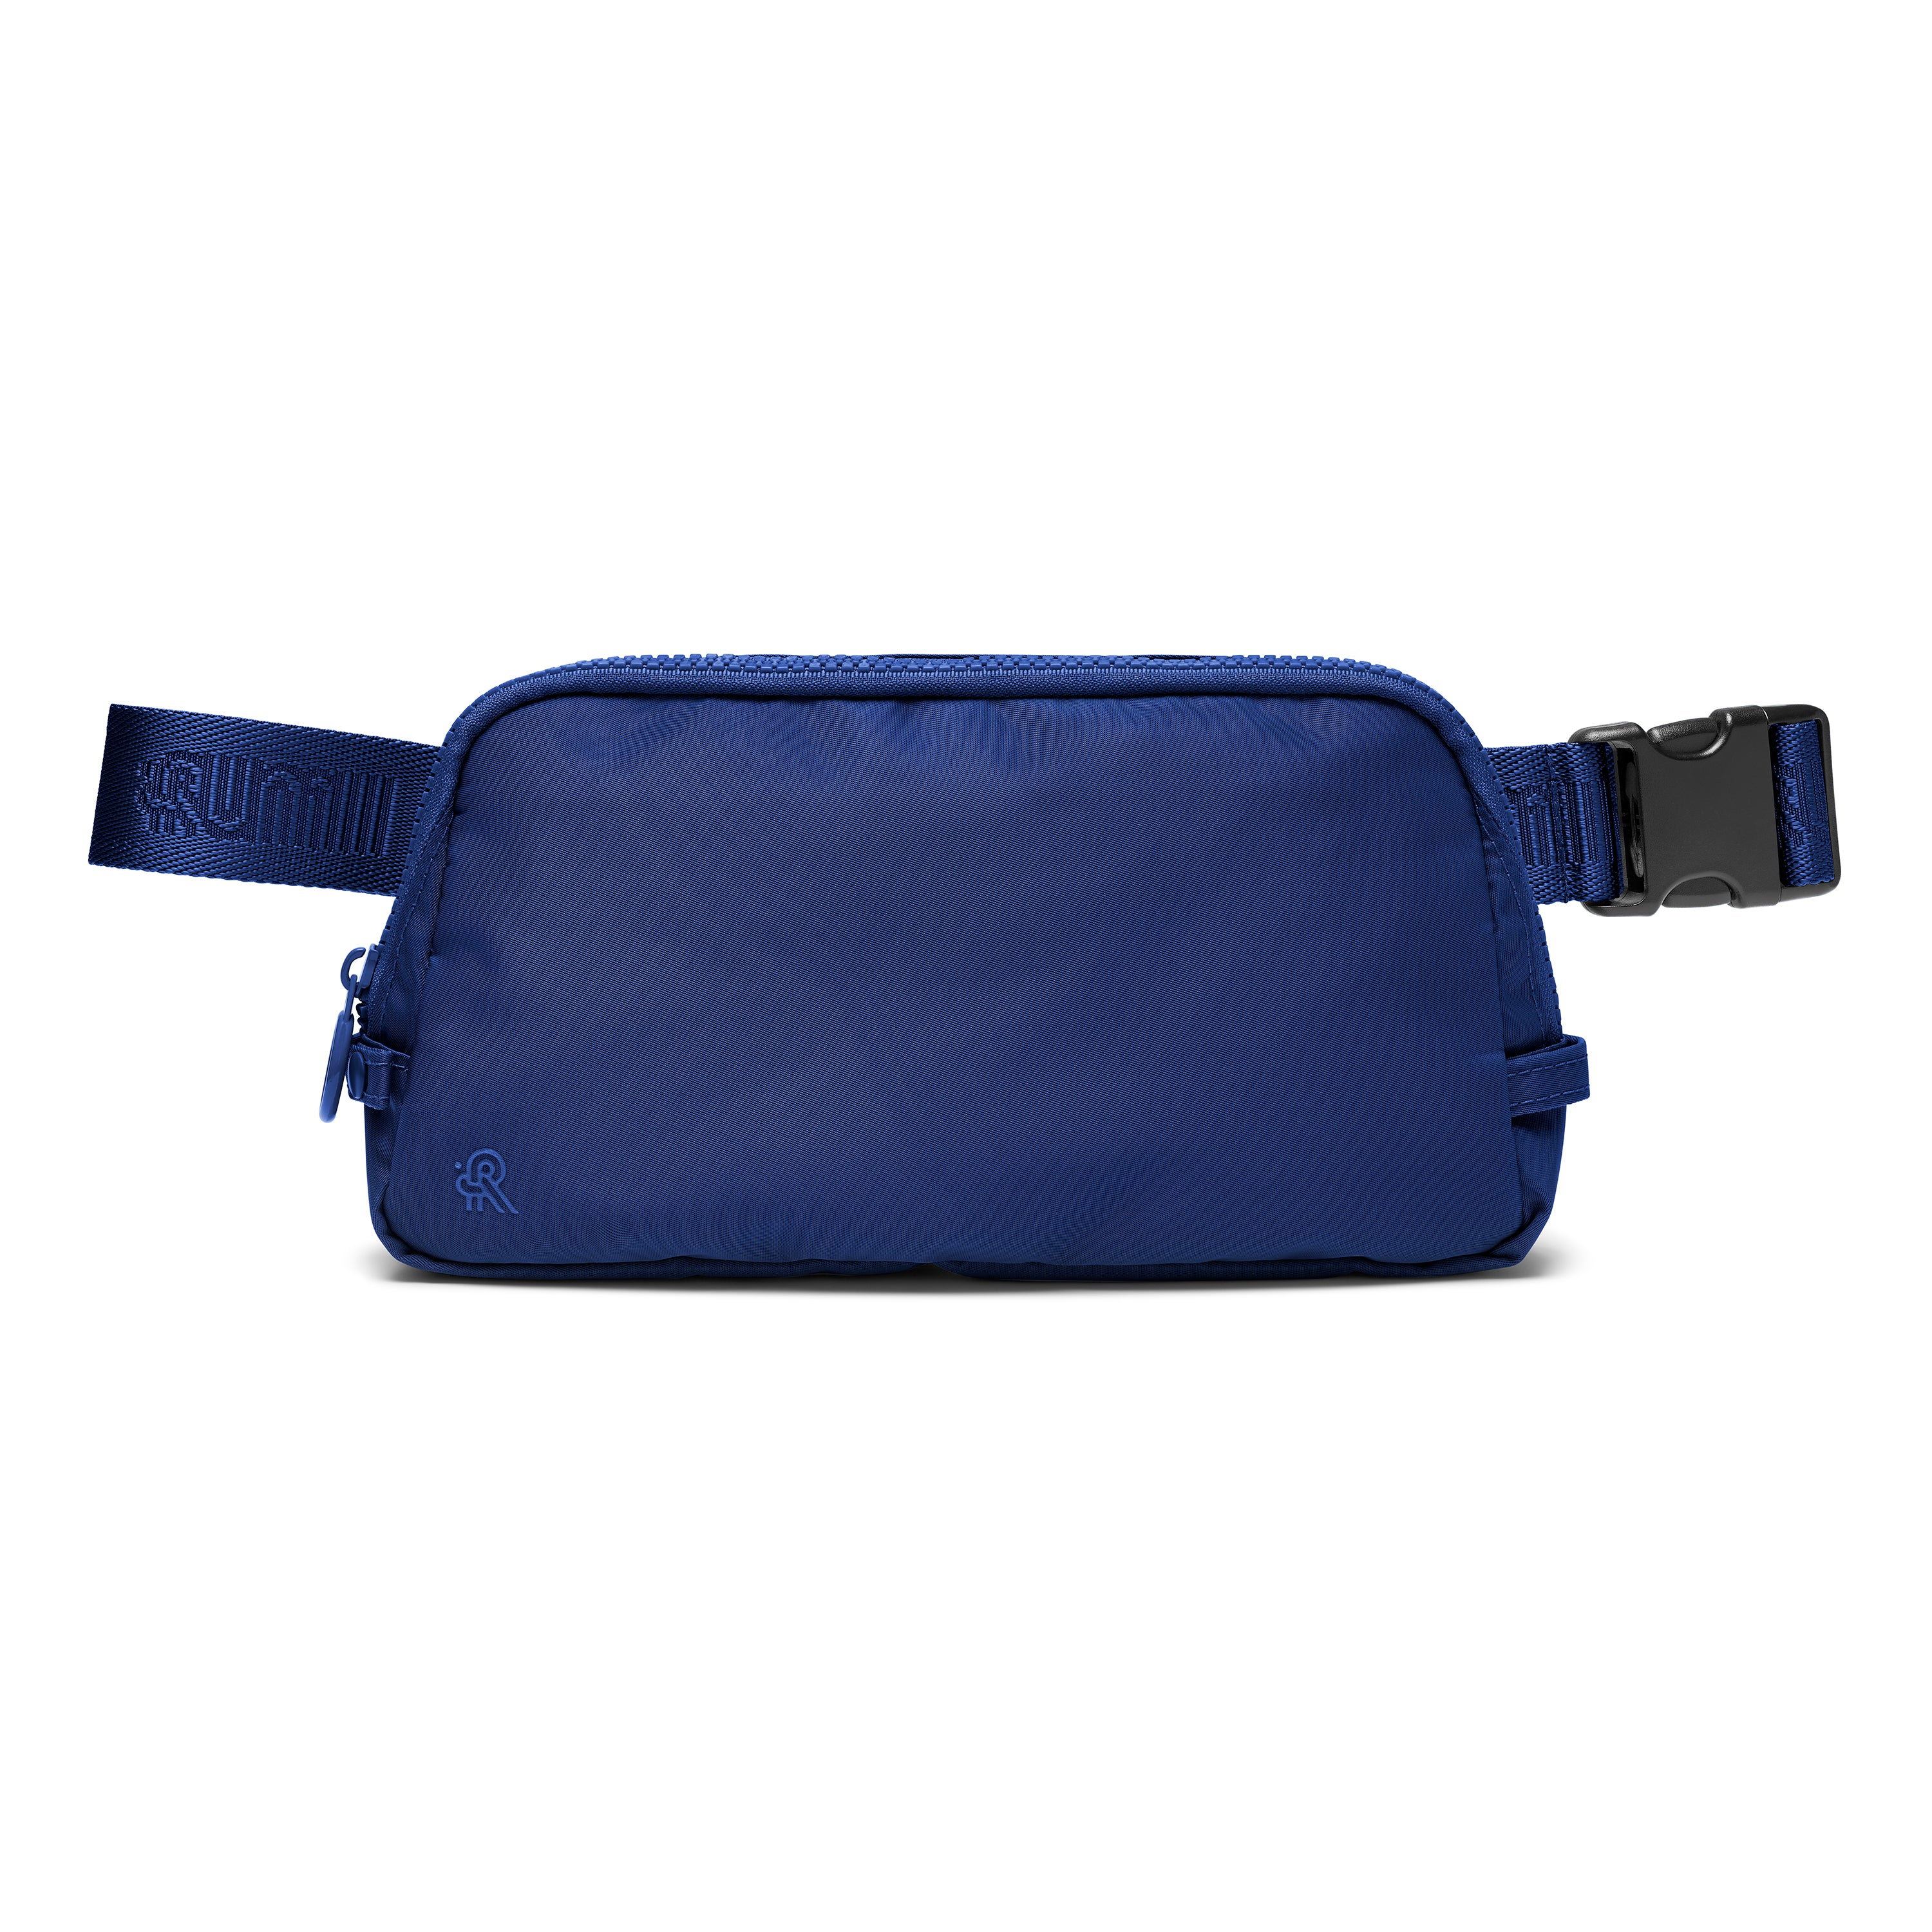 Navy blue bag for nurses